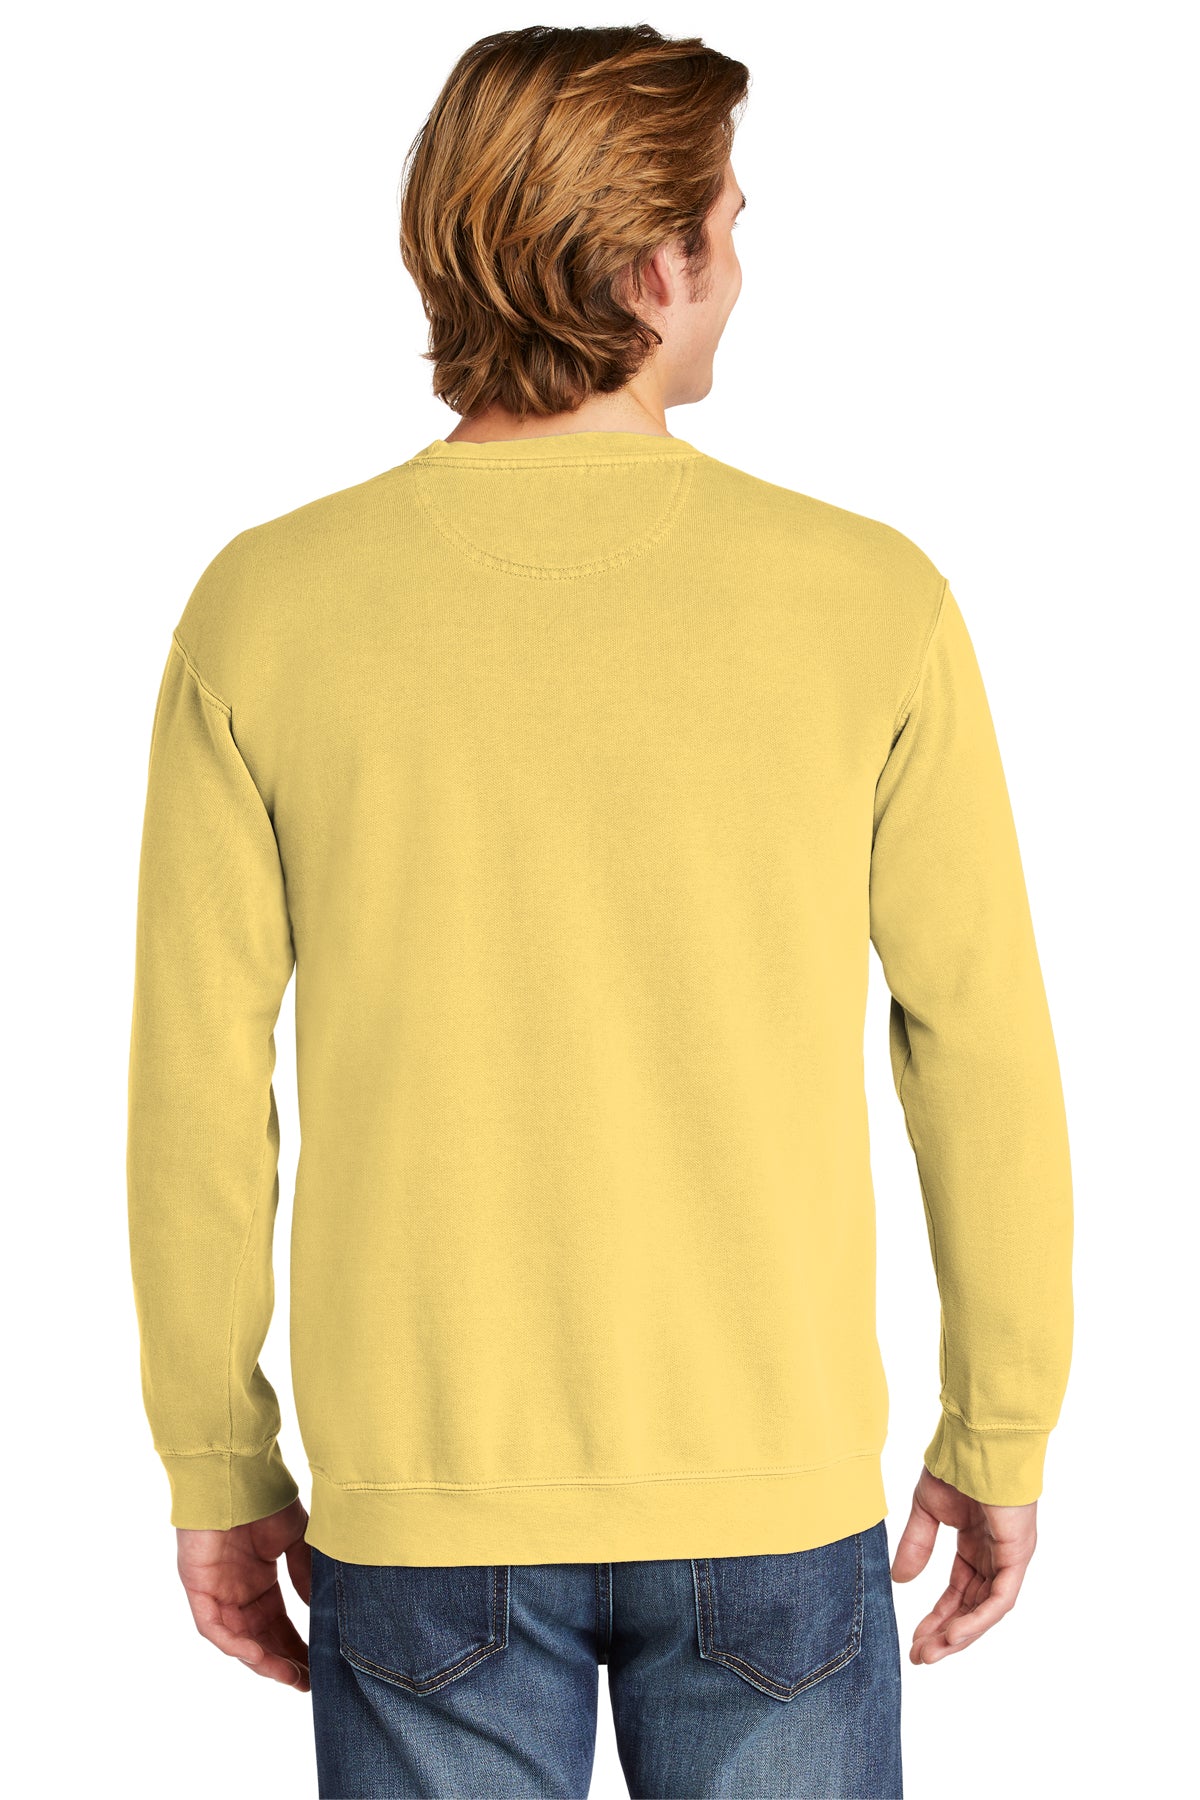 Comfort Colors Garment-Dyed Crewneck Sweatshirt (1566)